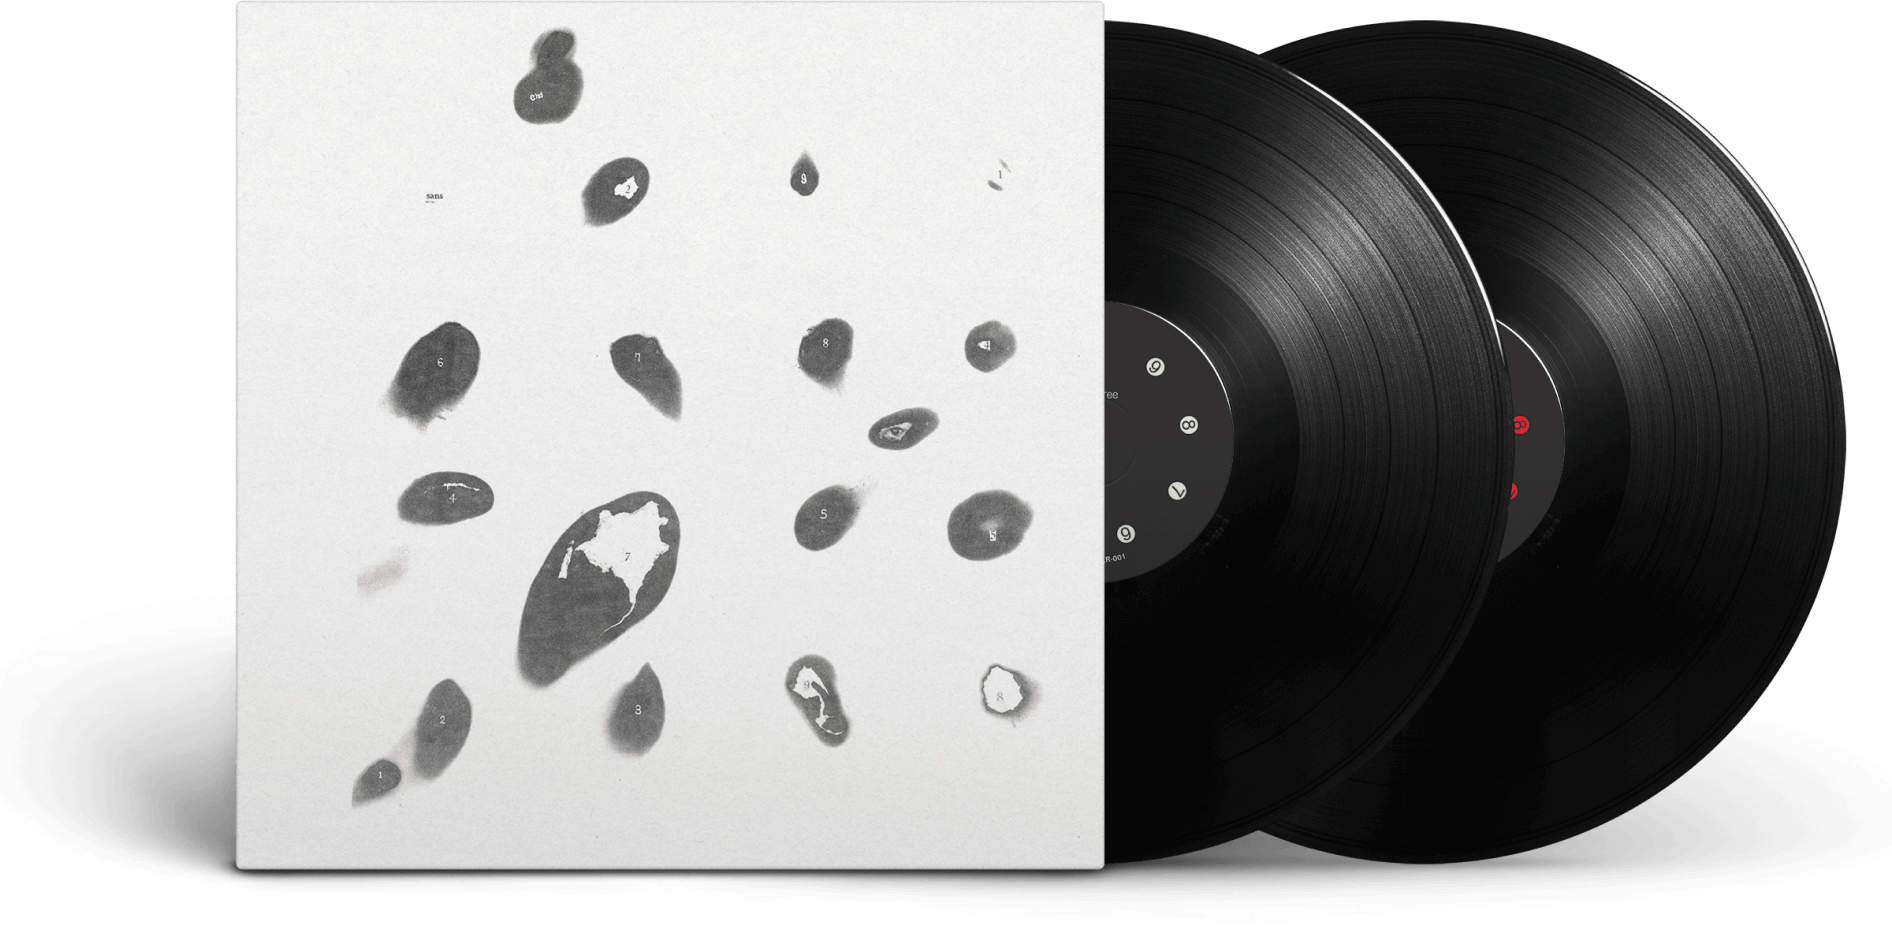 Untitled White Album by Hiroshi Tanaka & Yoichi Fuwa